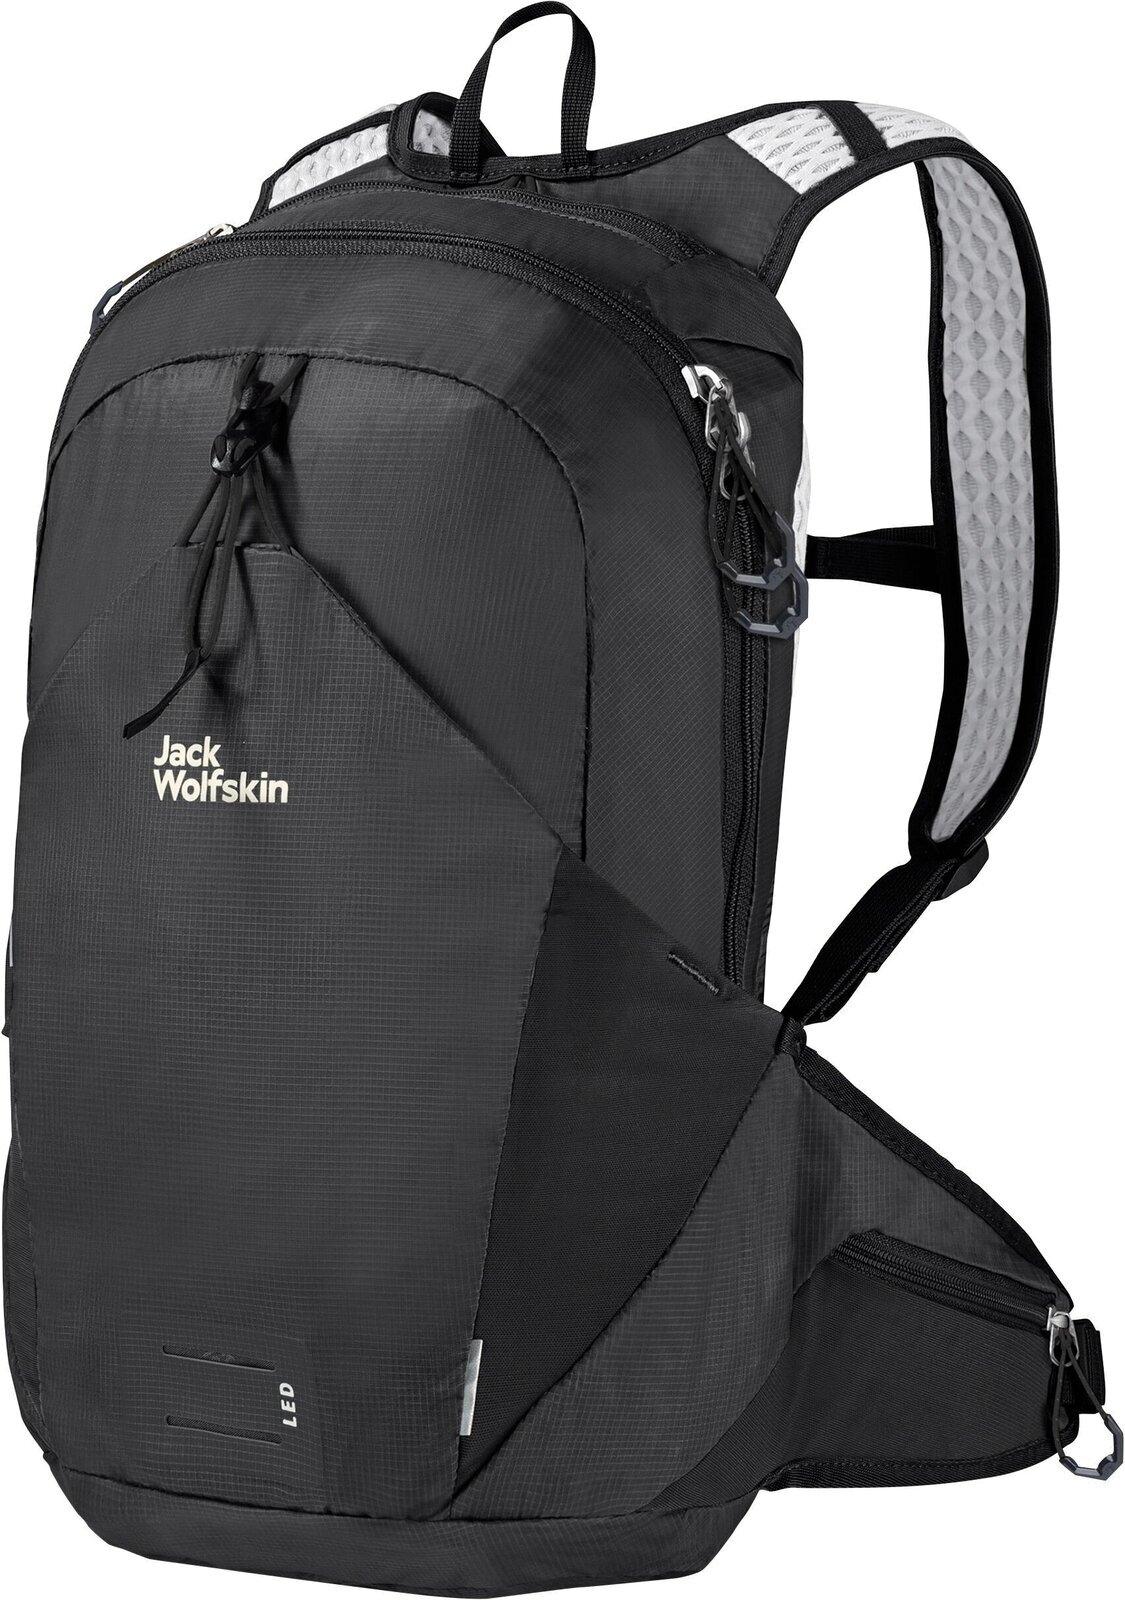 Outdoor Backpack Jack Wolfskin Moab Jam 16 Black One Size Outdoor Backpack